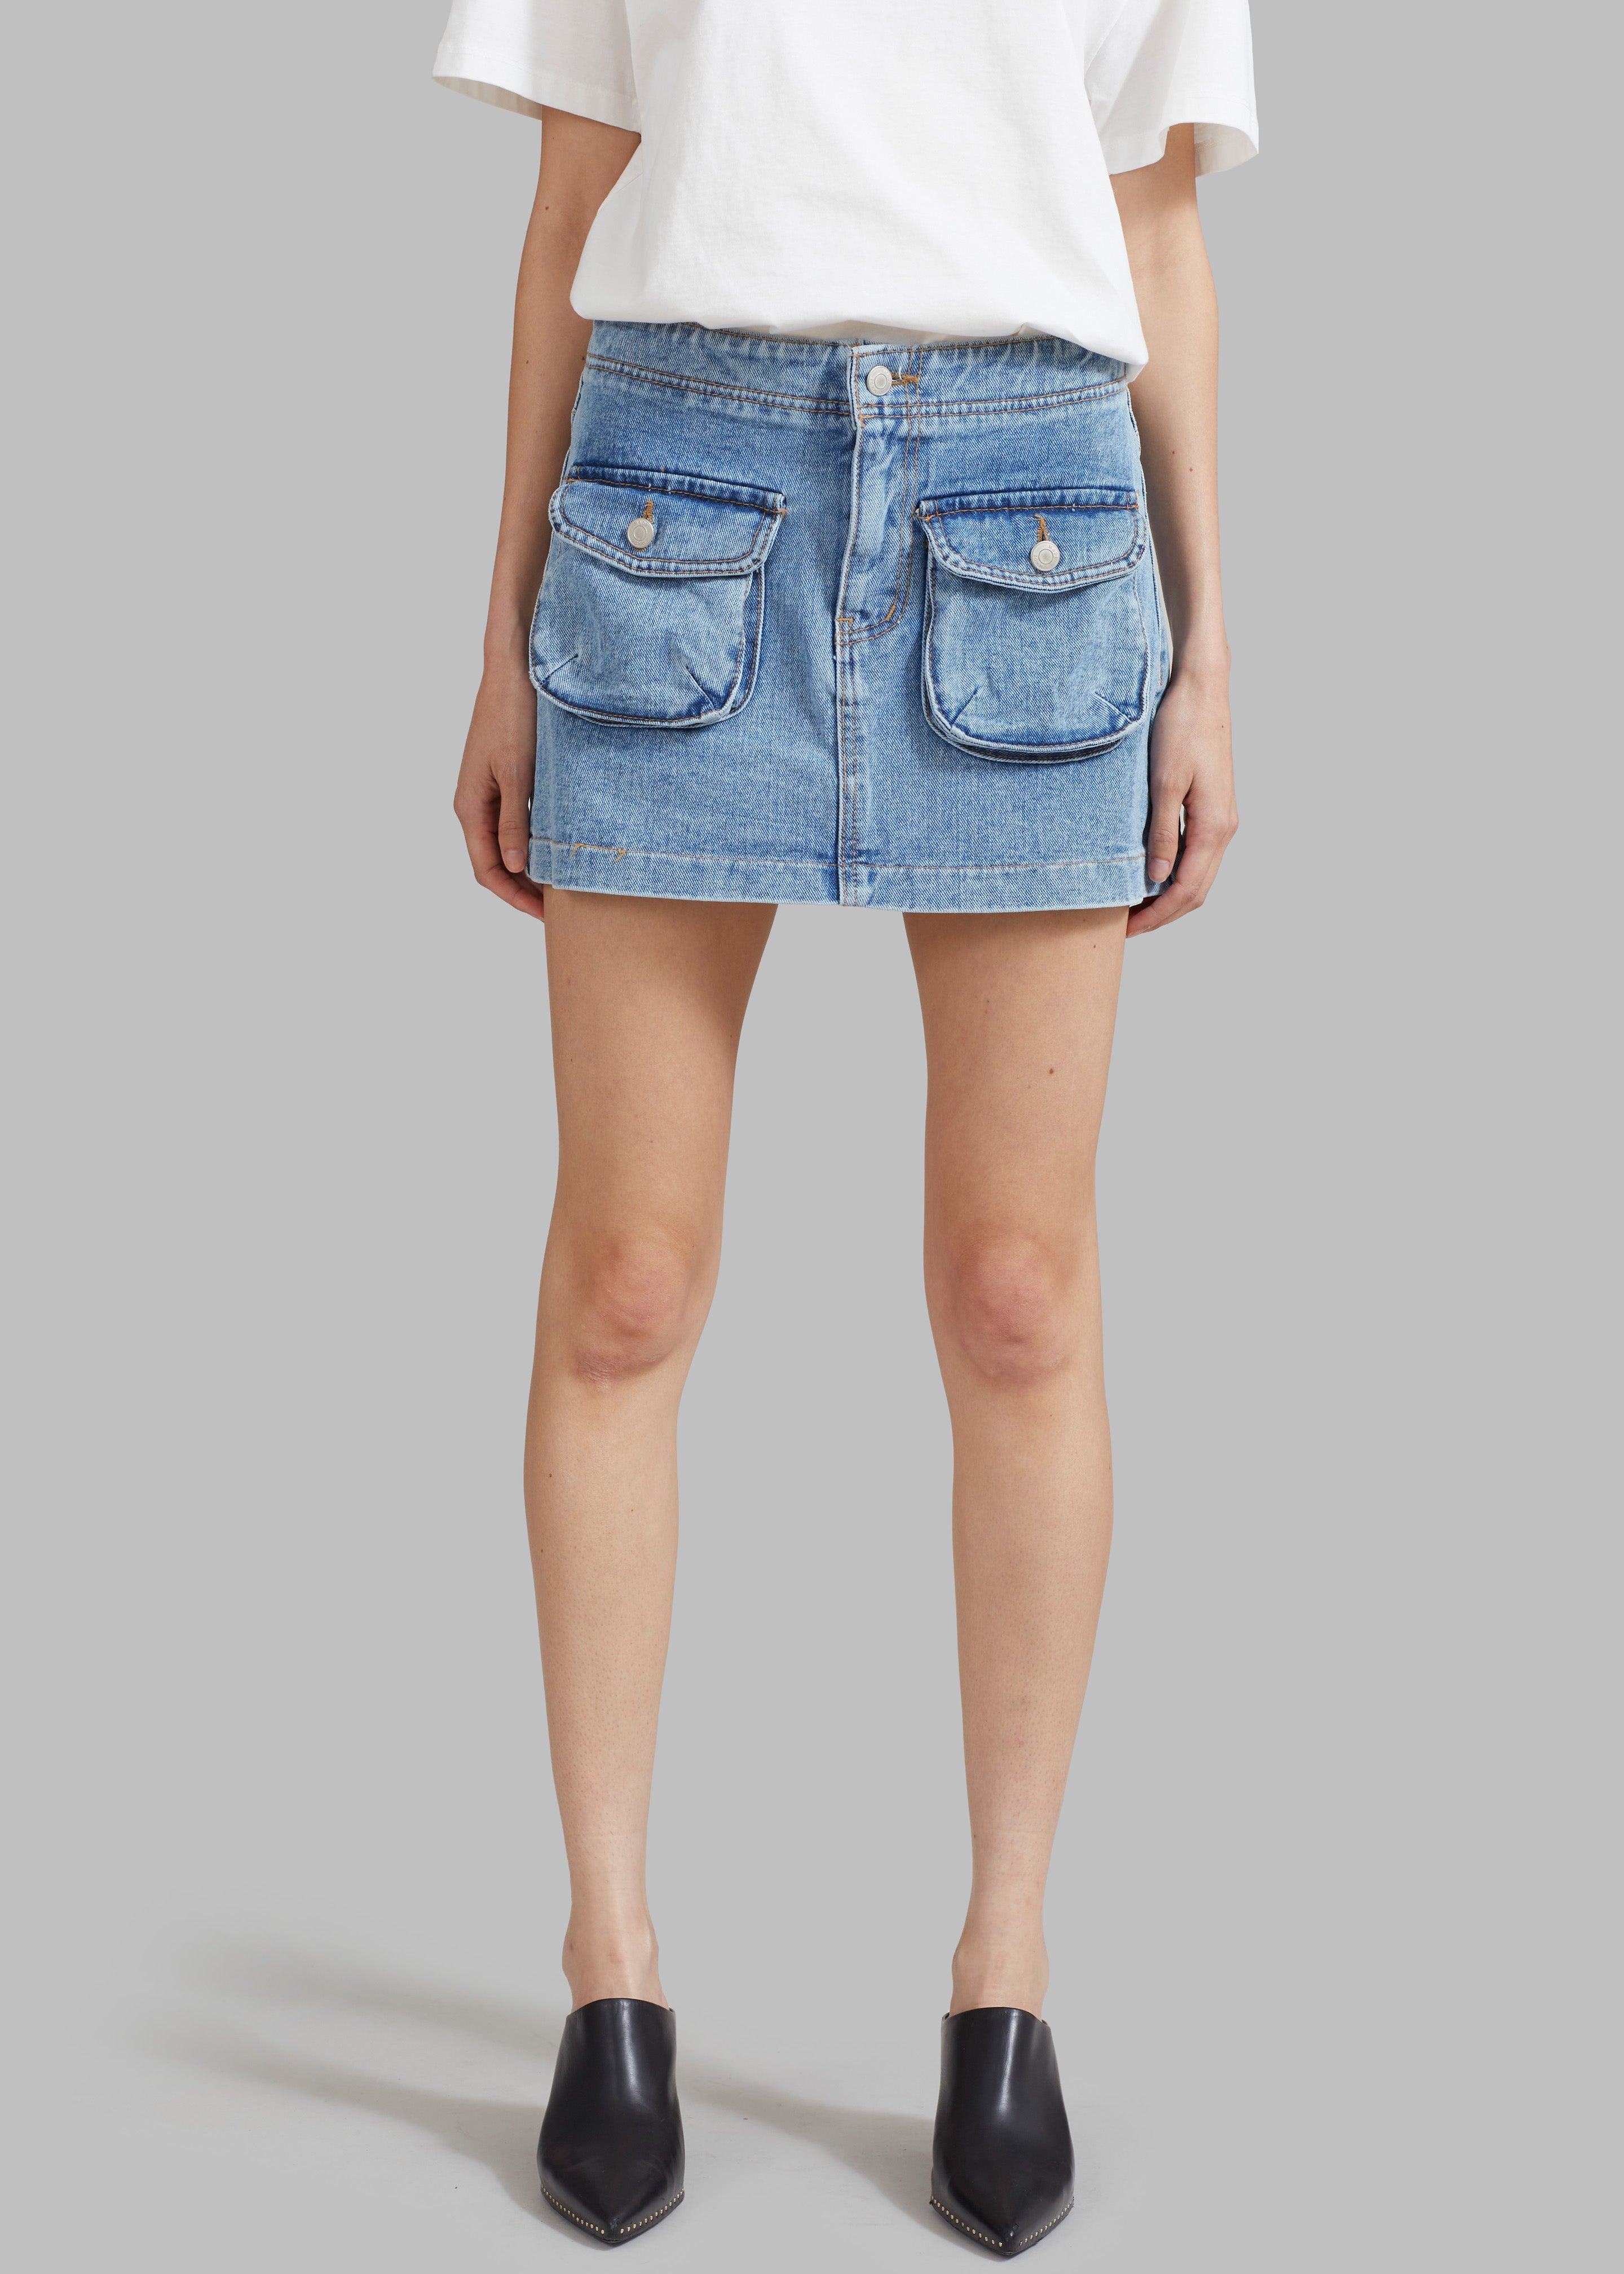 Thela Pocket Denim Skirt - Blue Wash - 4